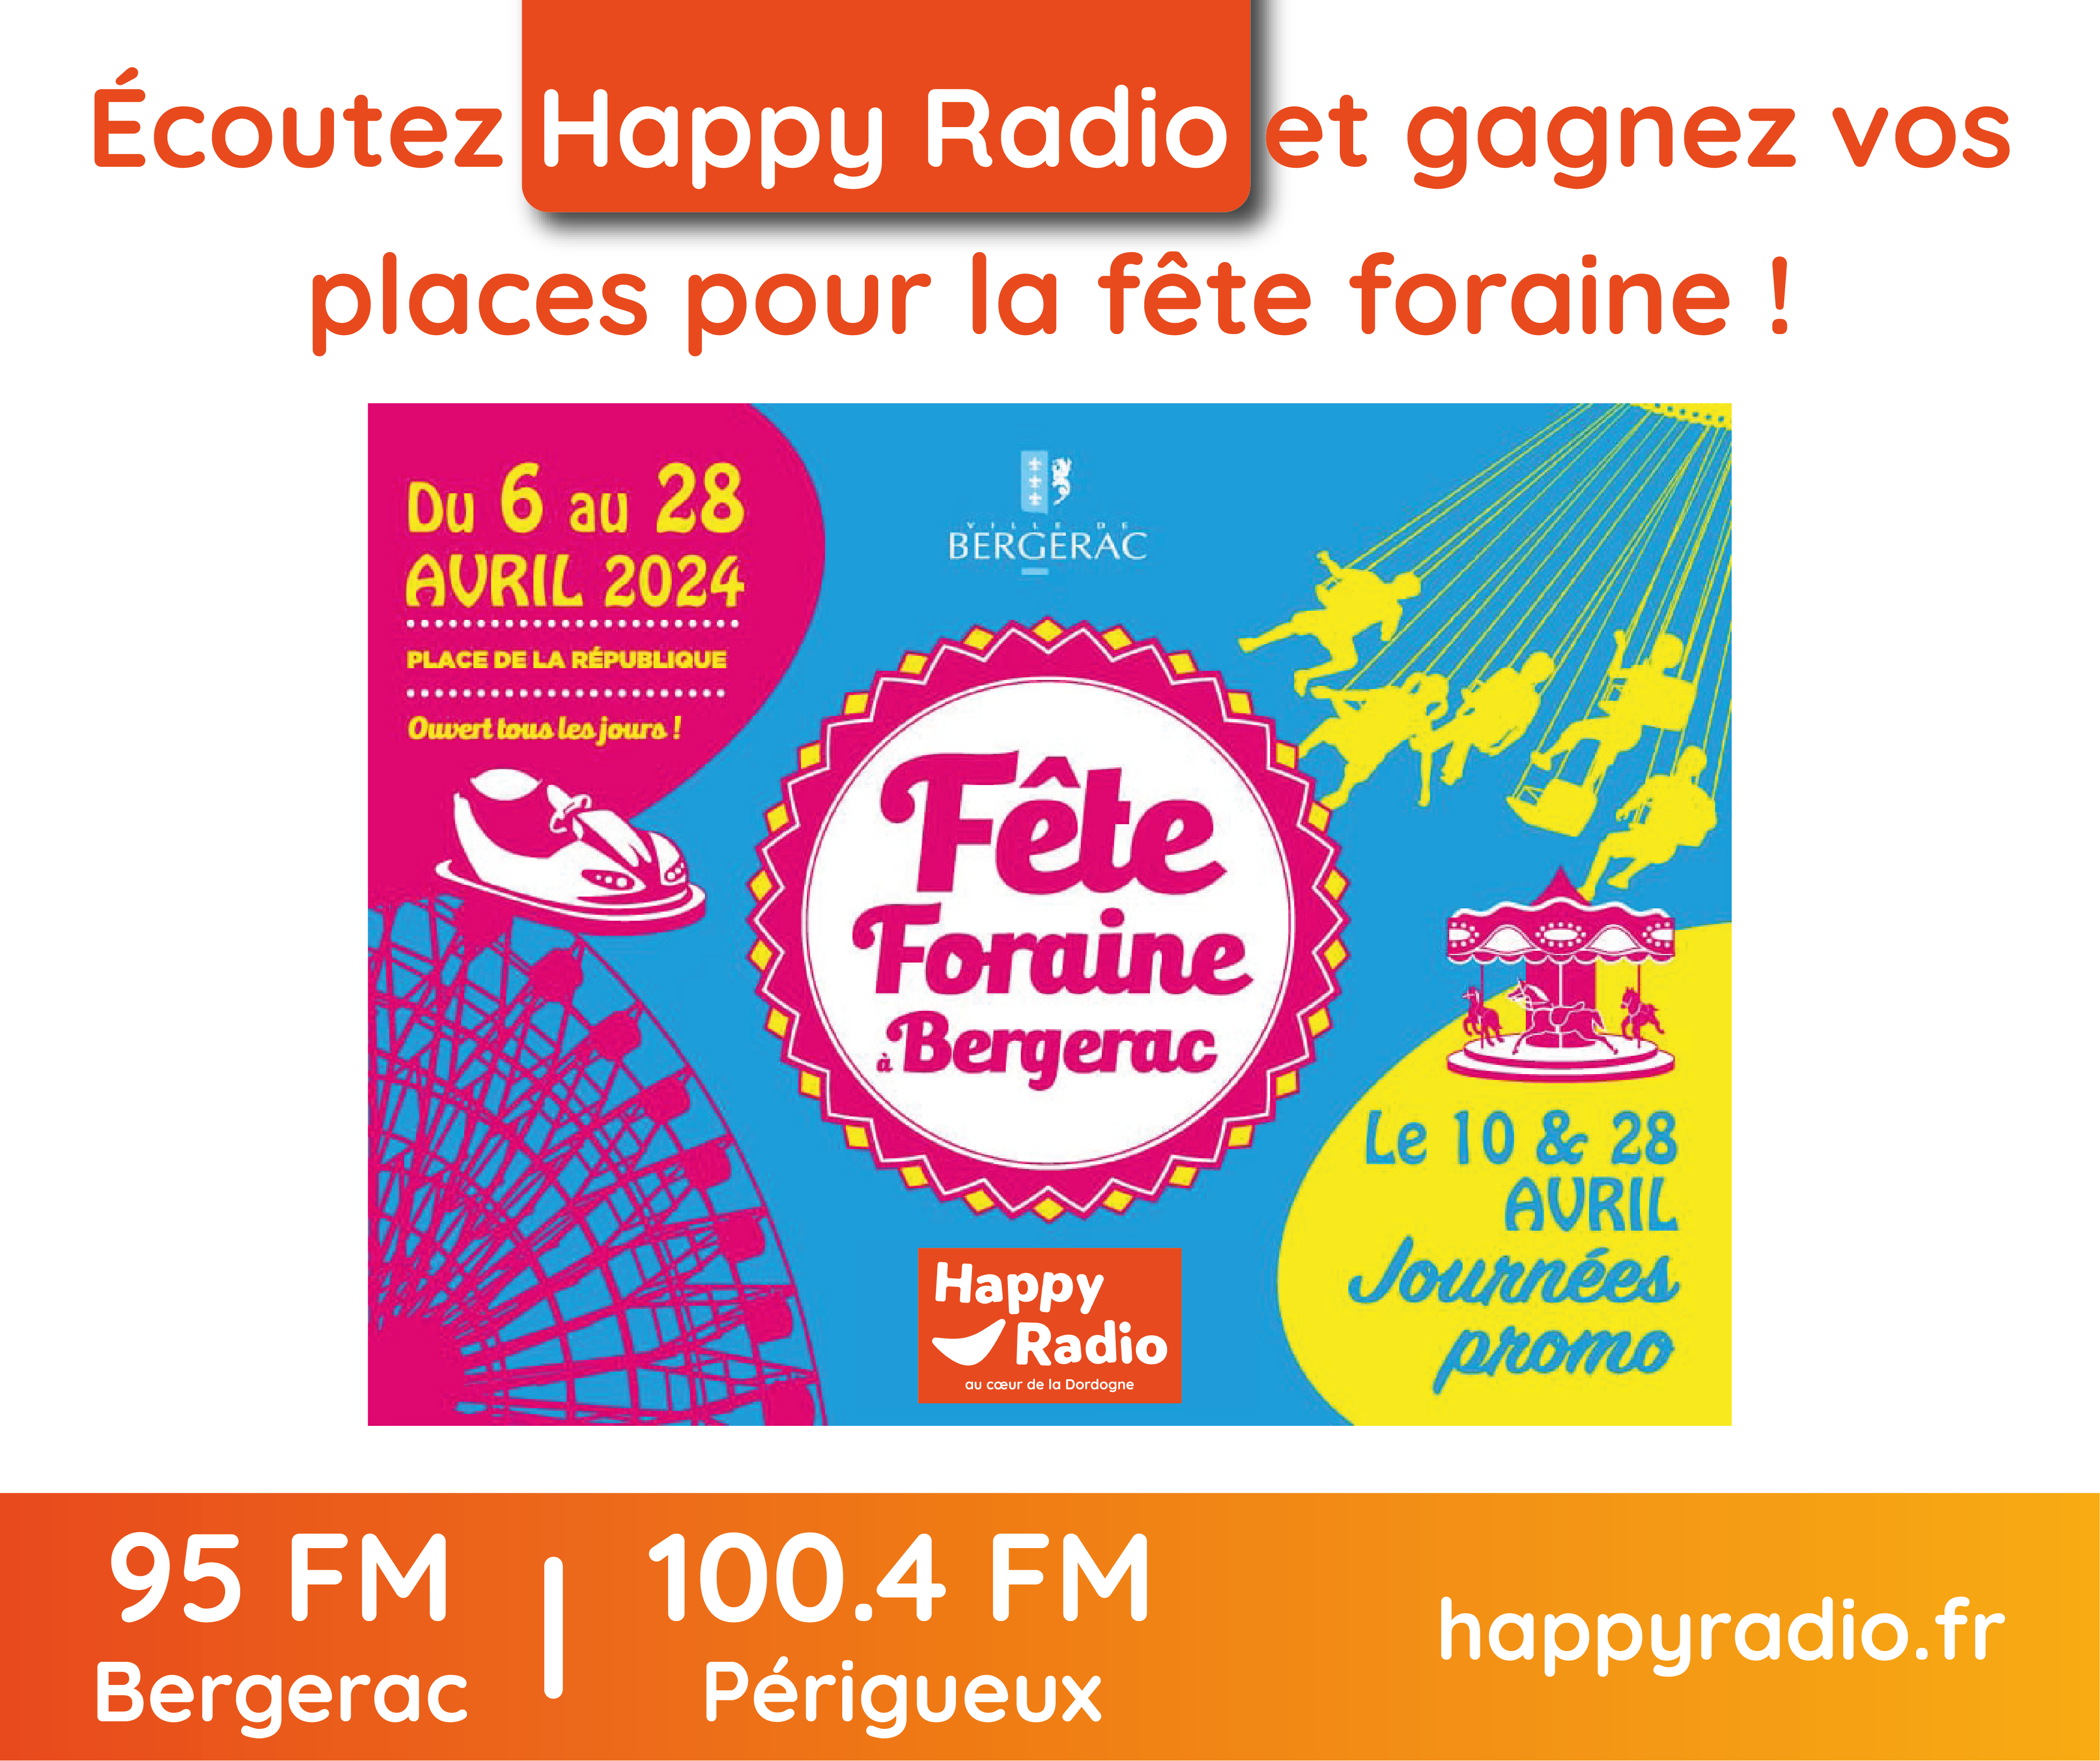 You are currently viewing Cette semaine Happy Radio vous emmène à la fête foraine